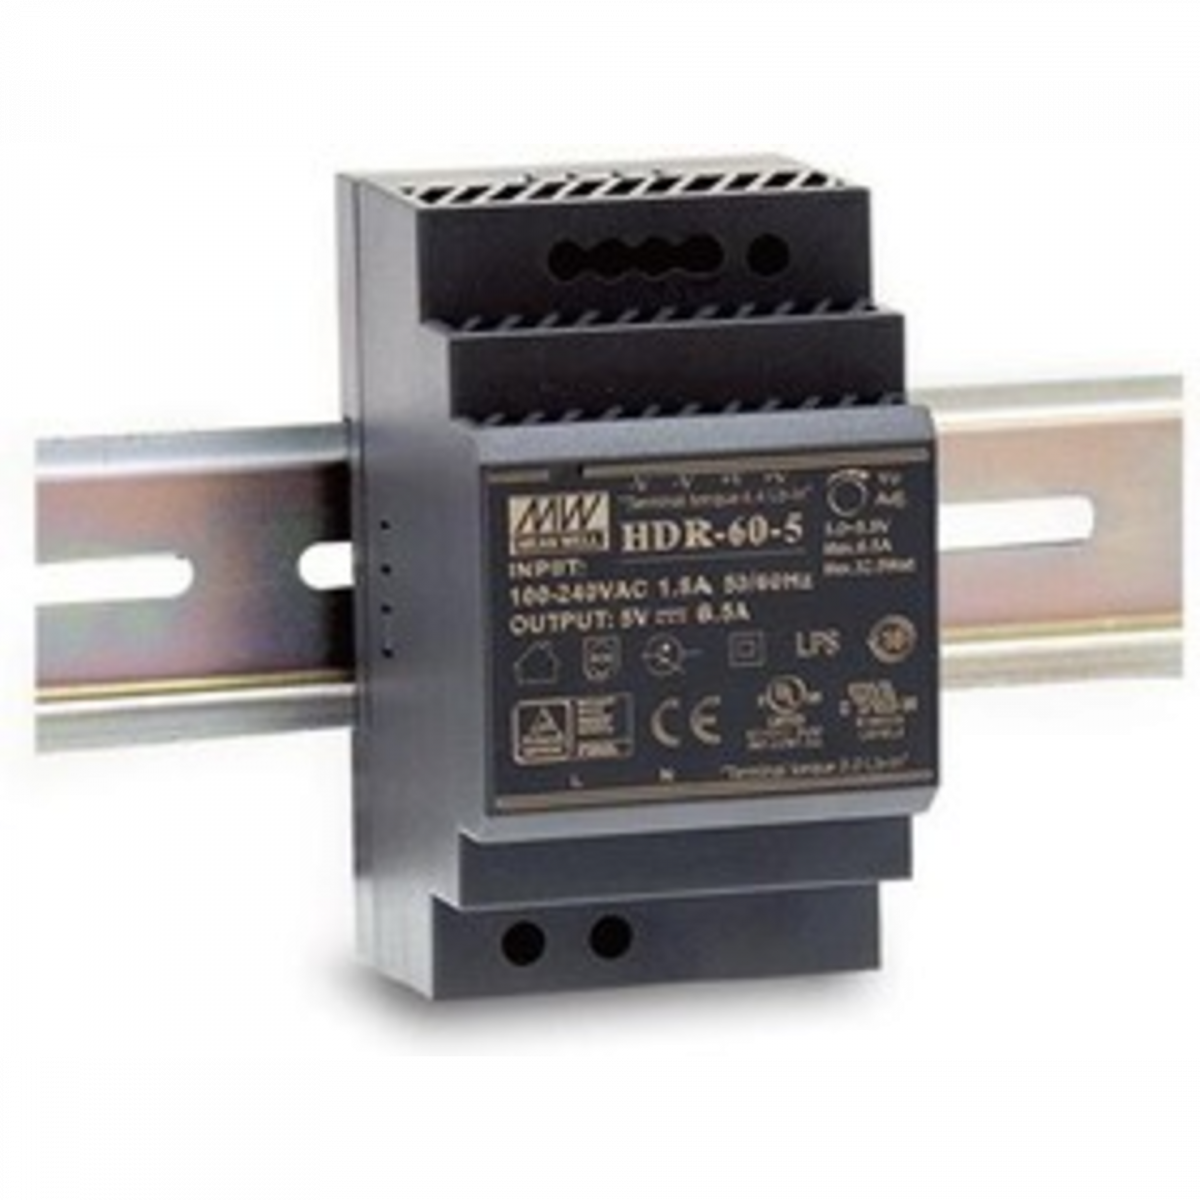 HDR-60-24 Блок питания на DIN-рейку, 24В, 2,5А, 60Вт Mean Well